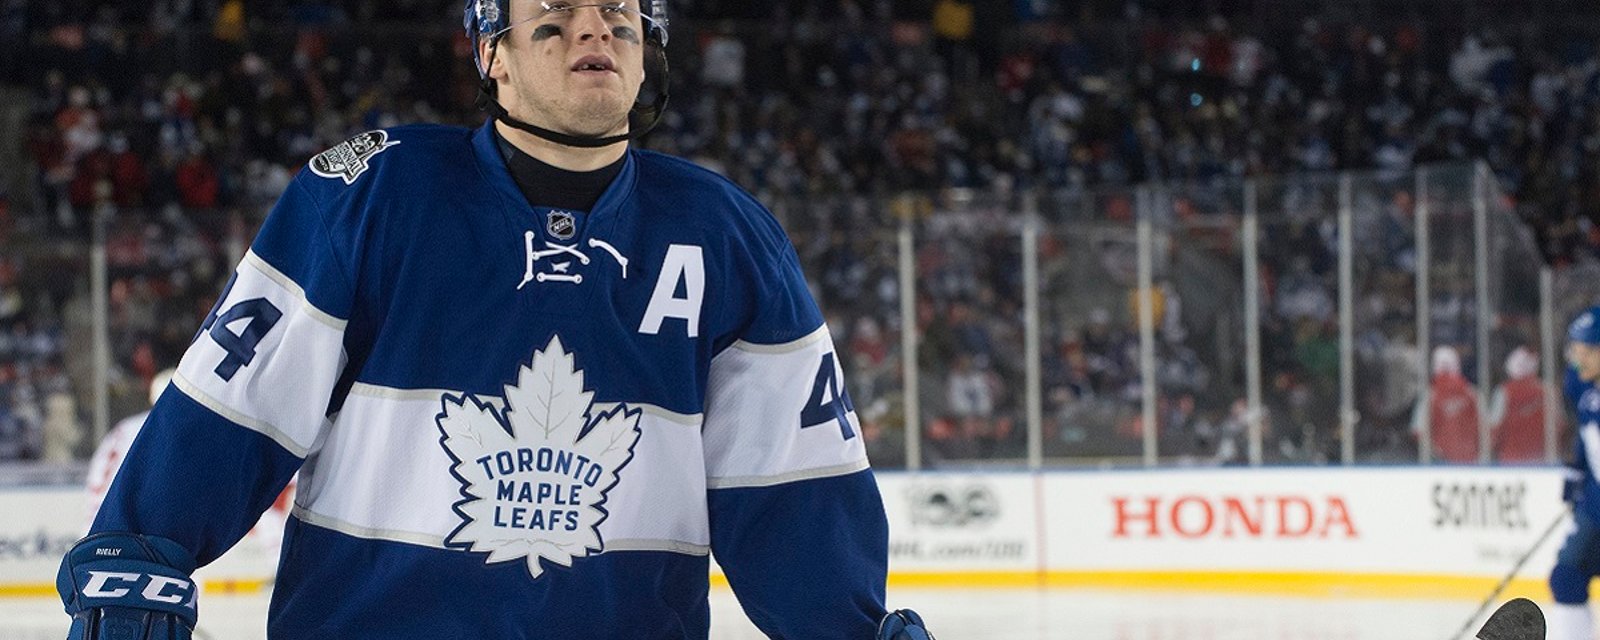 Breaking: First update on injured Leafs defenseman Morgan Rielly.